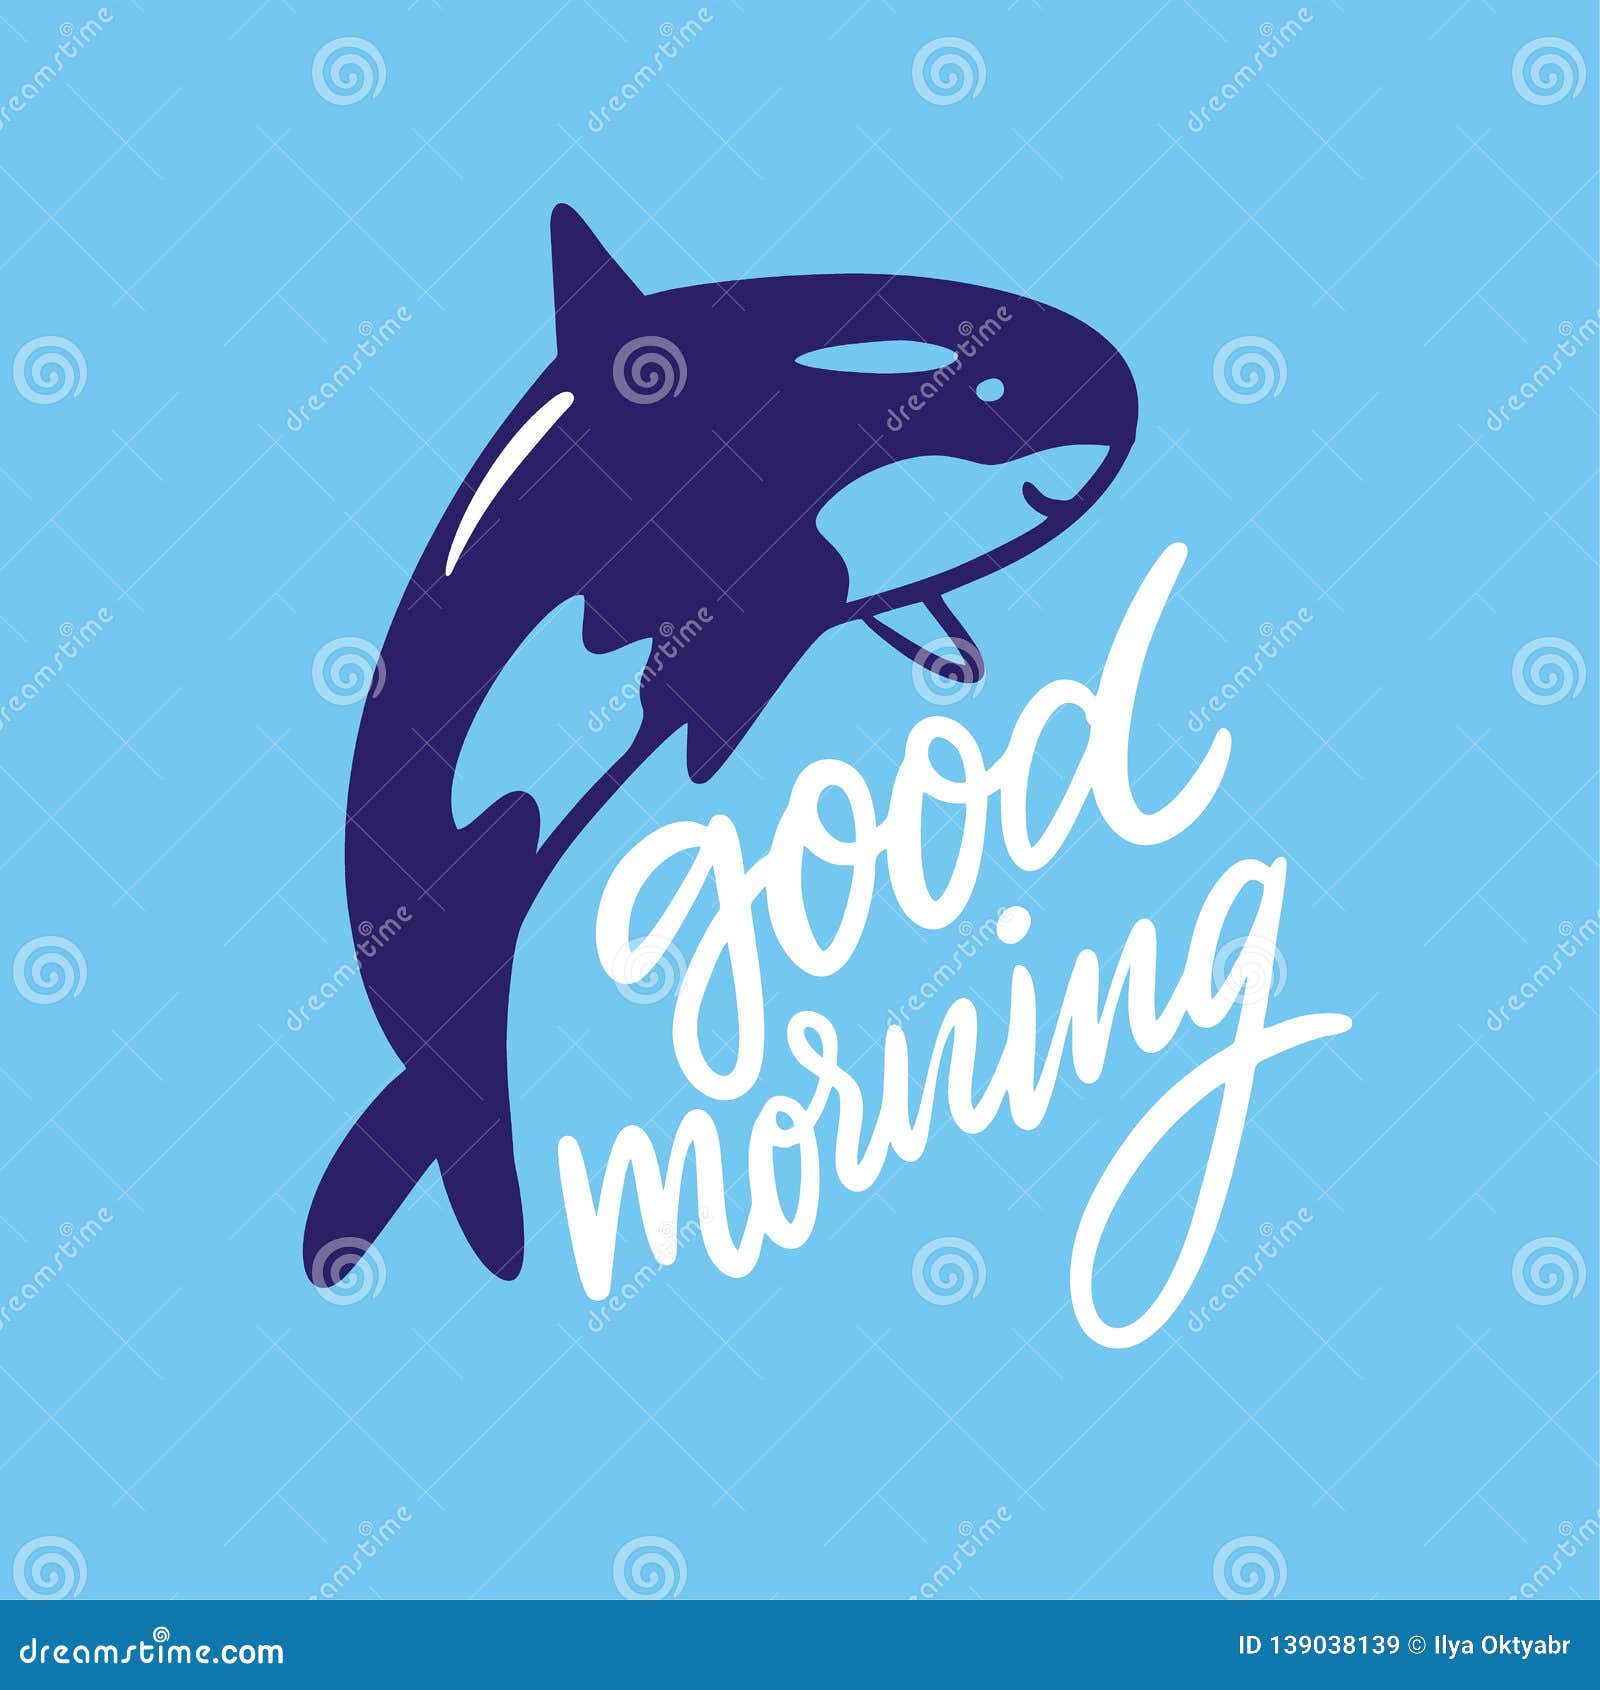 Good Morning Hand Drawn Vector Lettering and Grampus Sea Animal  Illustration Stock Illustration - Illustration of greeting, retro: 139038139